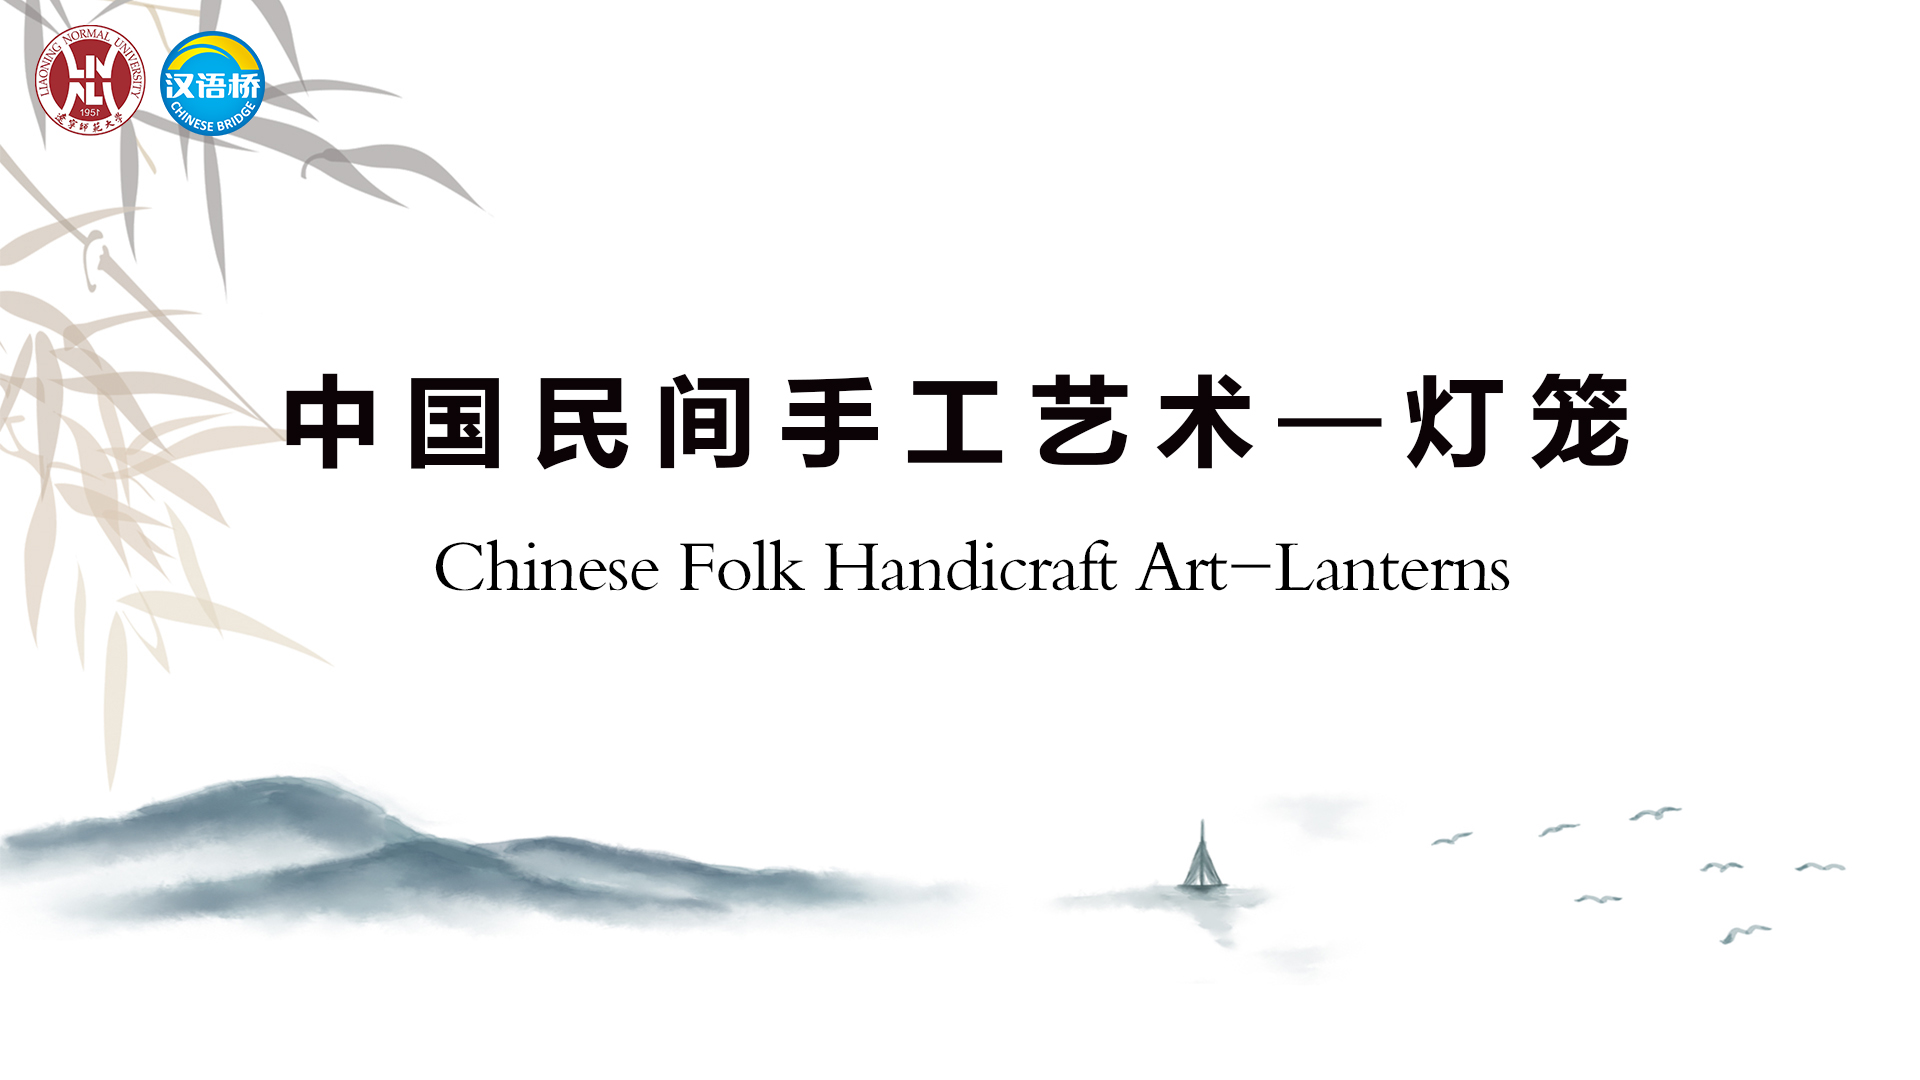 Chinese Folk Handicraft Art—Lanterns